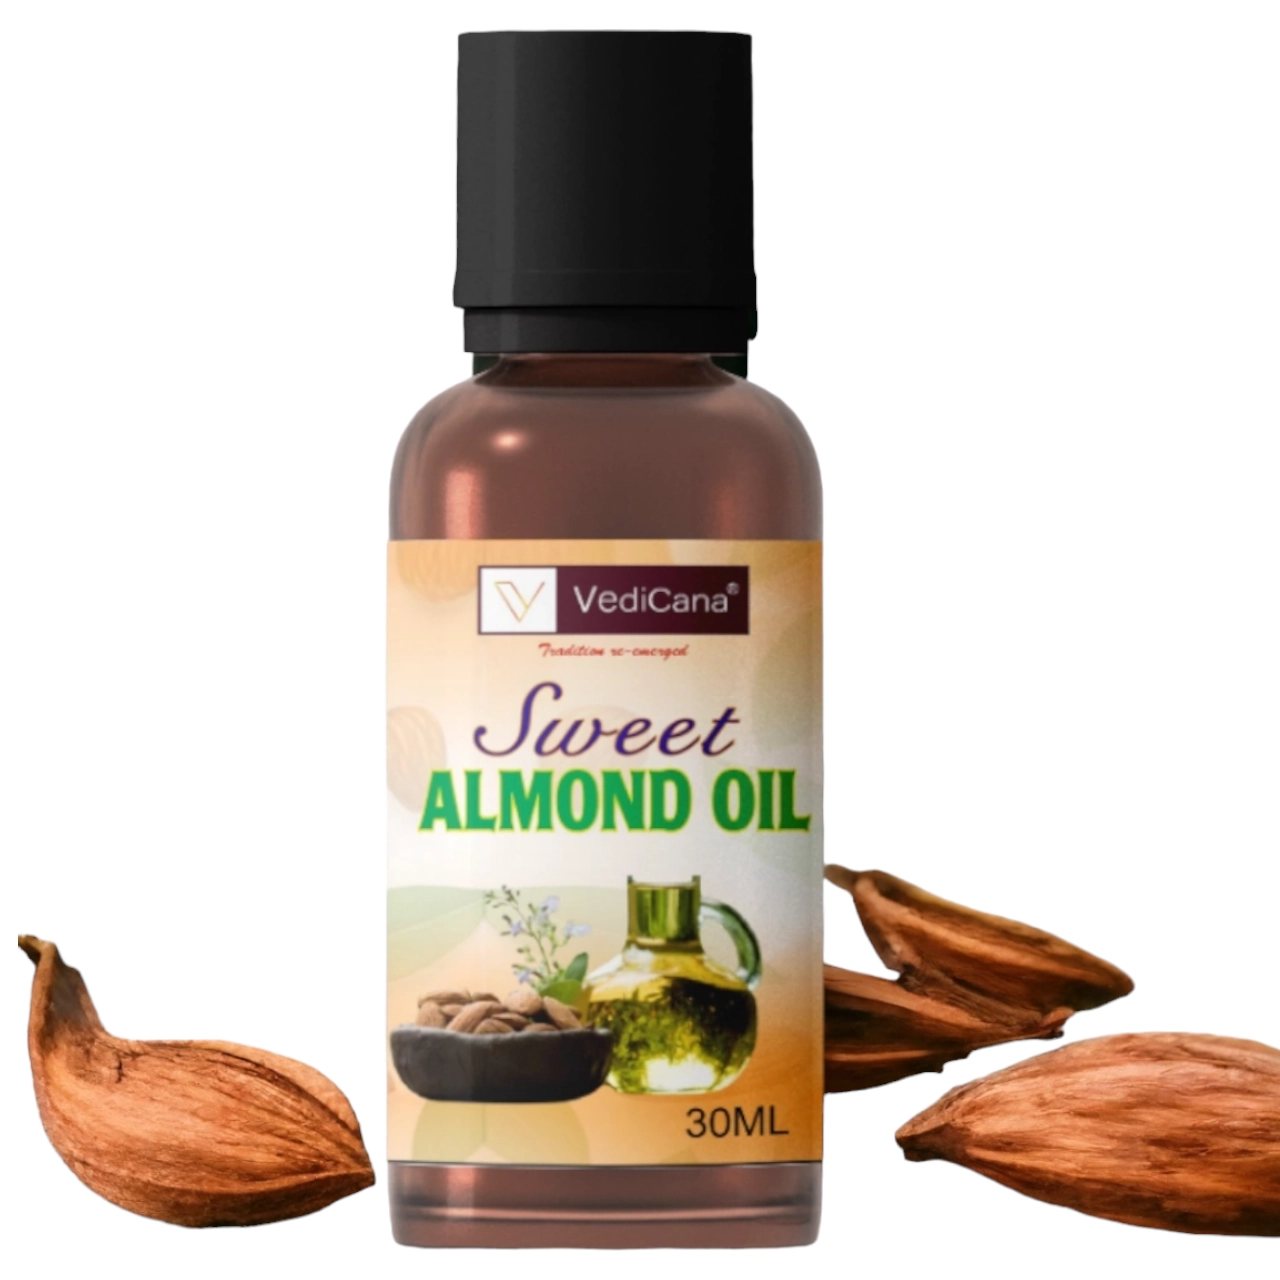 VediCana Sweet Almond Oil